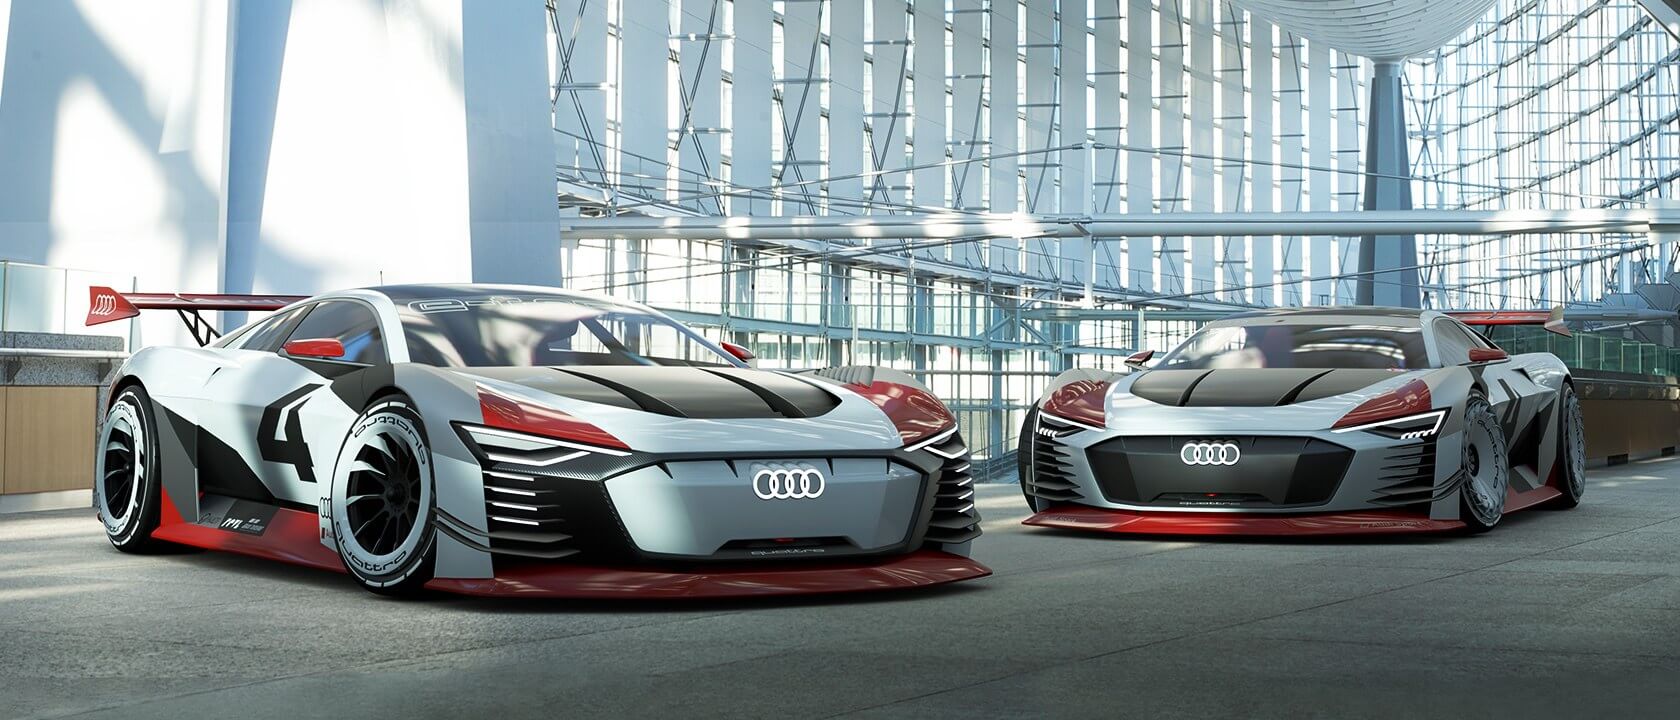 Audi's e-tron Gran Turismo concept car is a reality